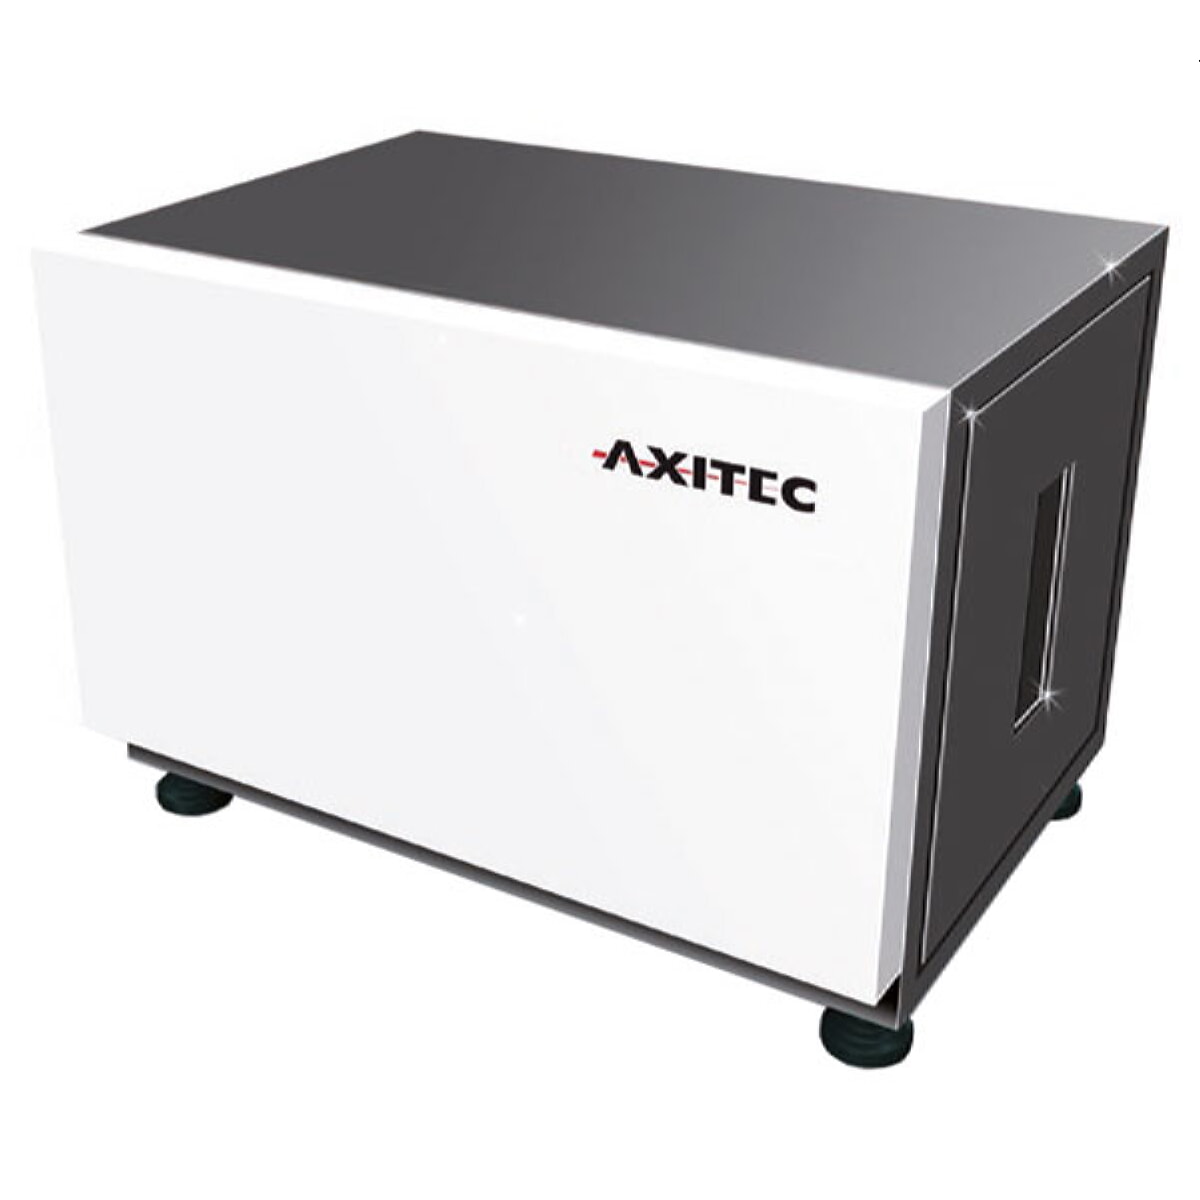 AXITEC AXIstorage Li 8S (8.9 kWh) lithium-ion battery storage system